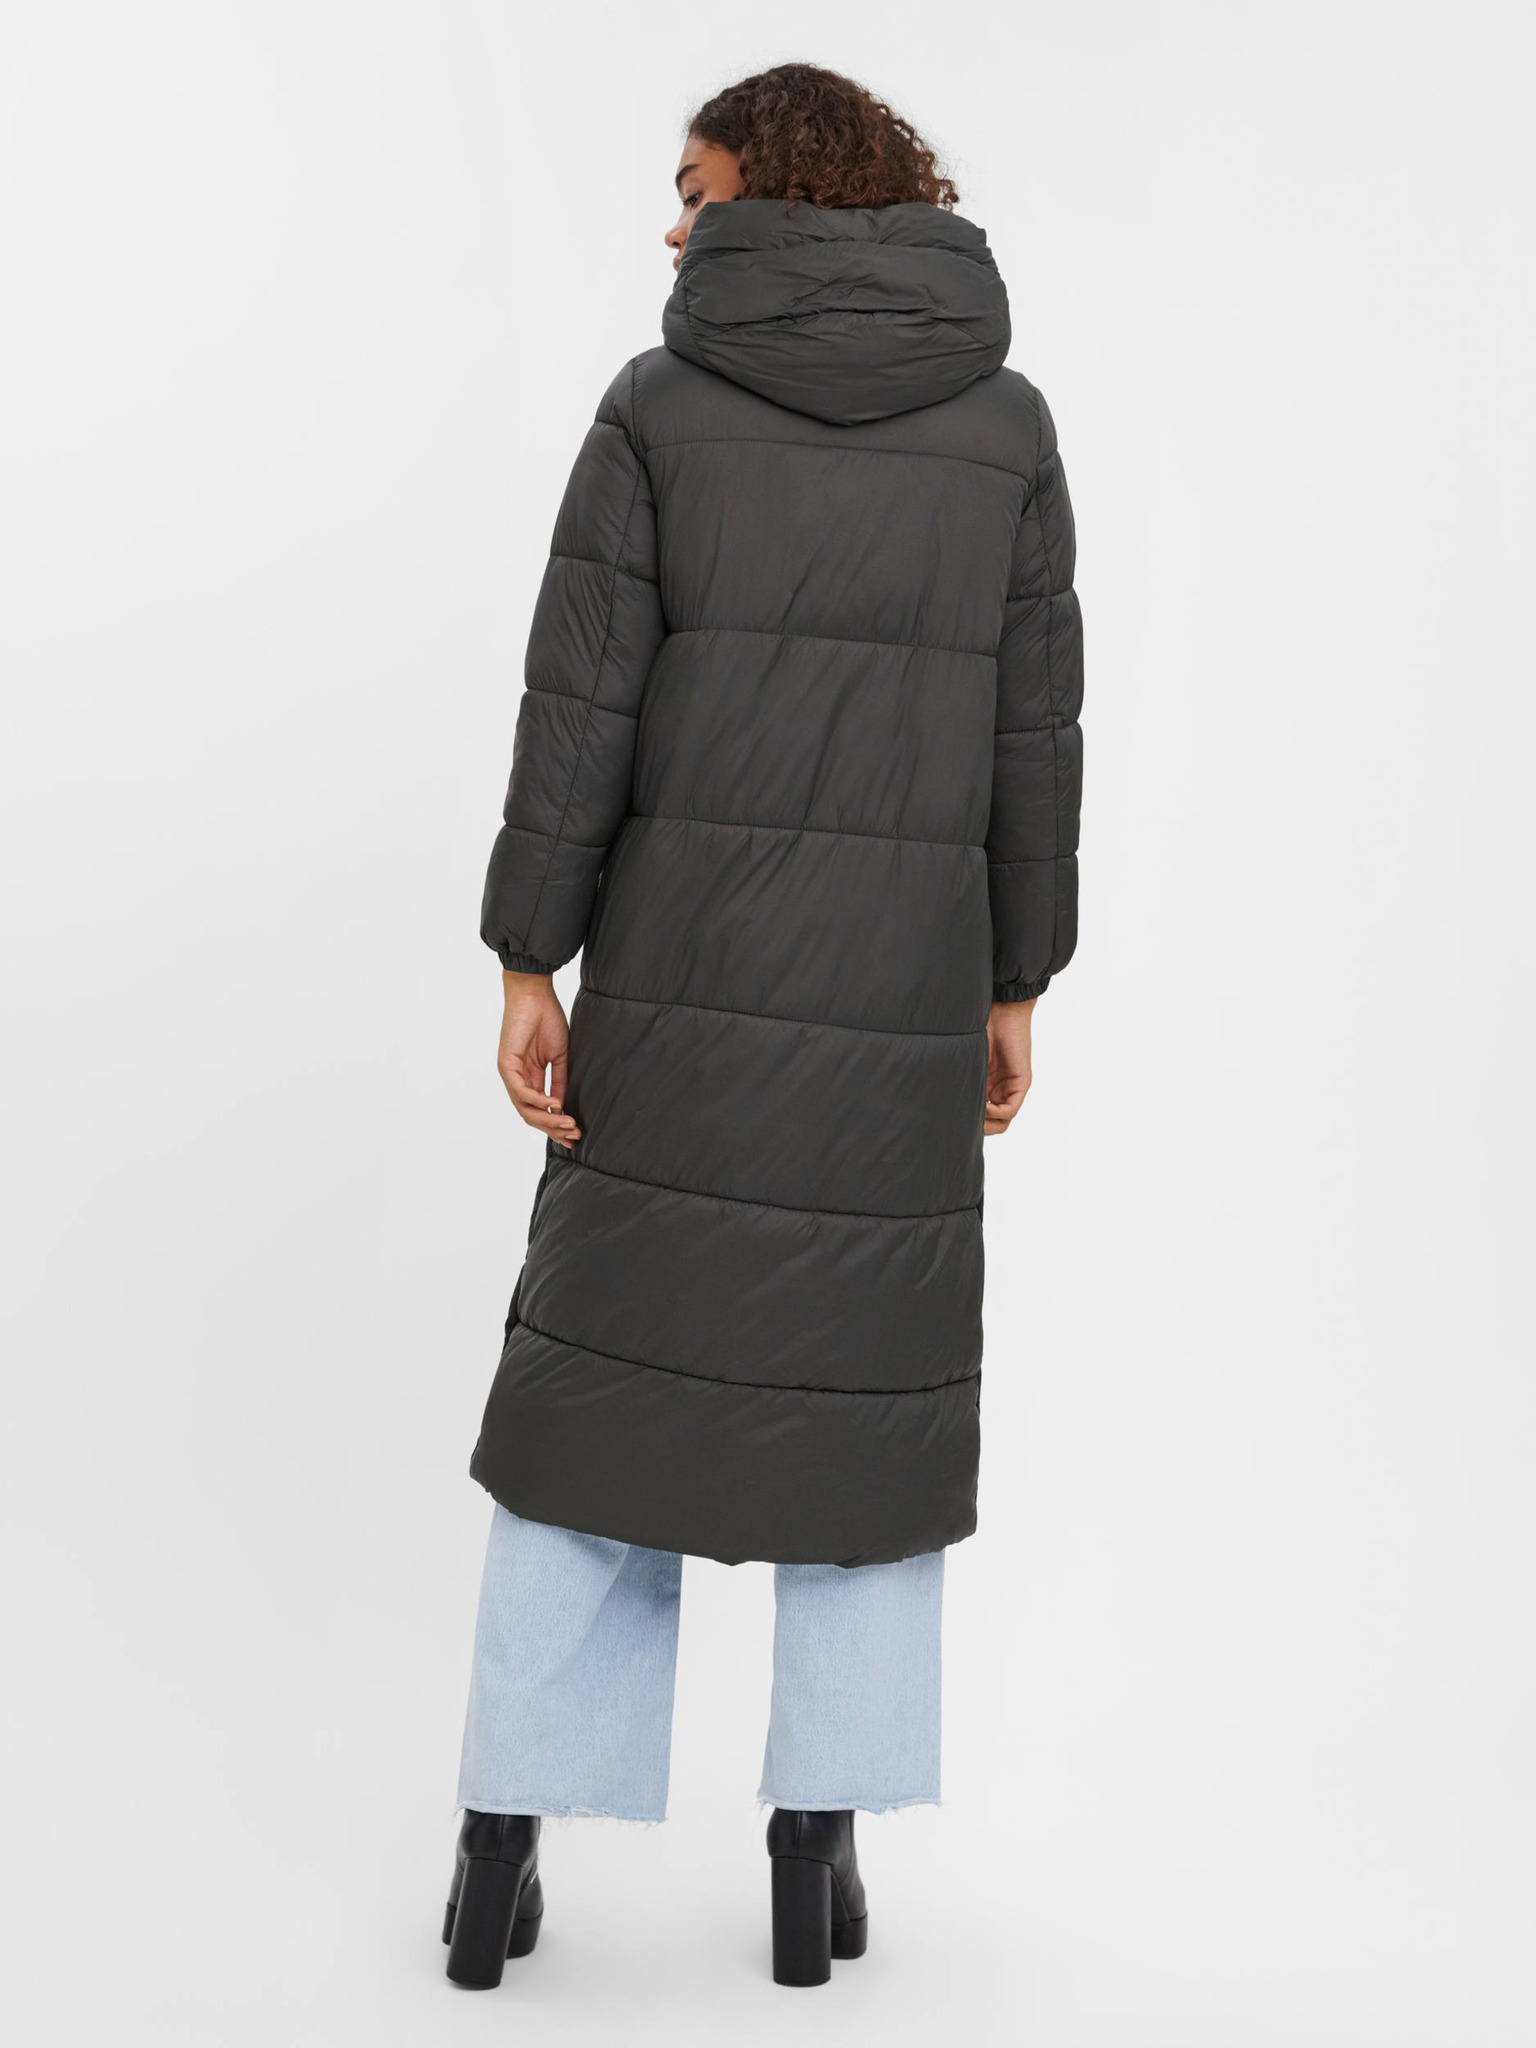 Uppsala Moda - Vero Coat